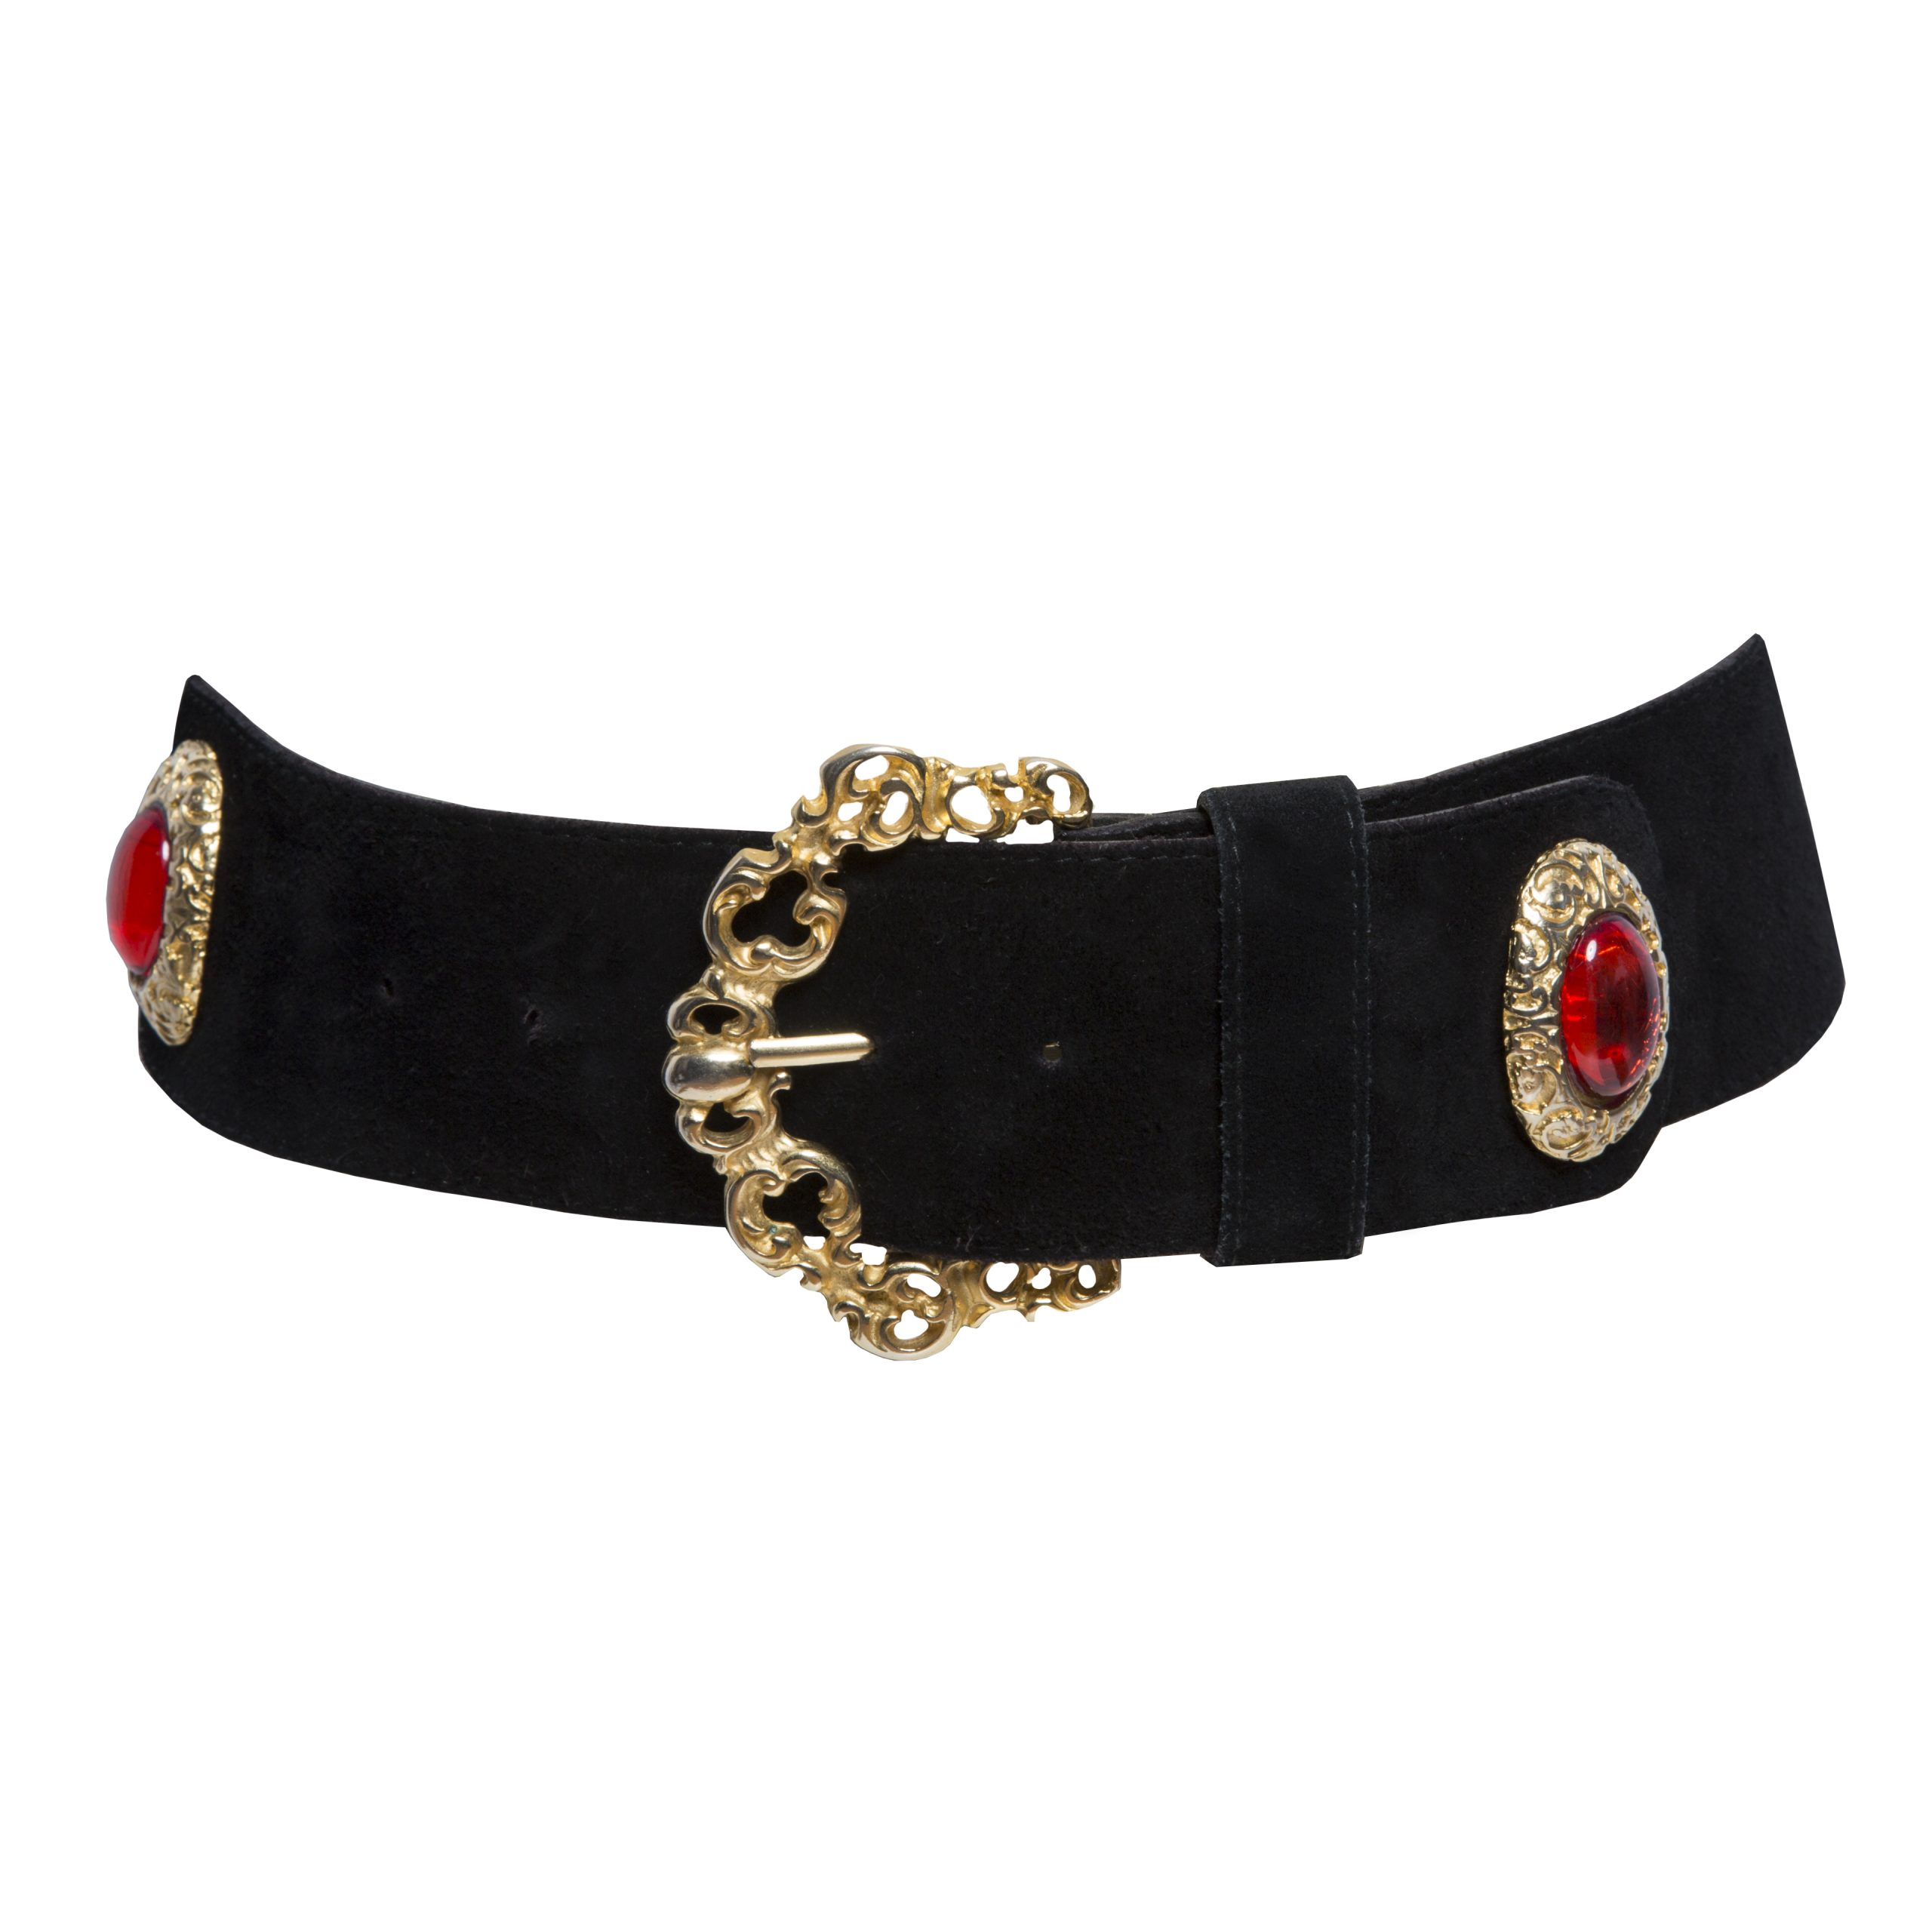 Vintage black suede belt with stones